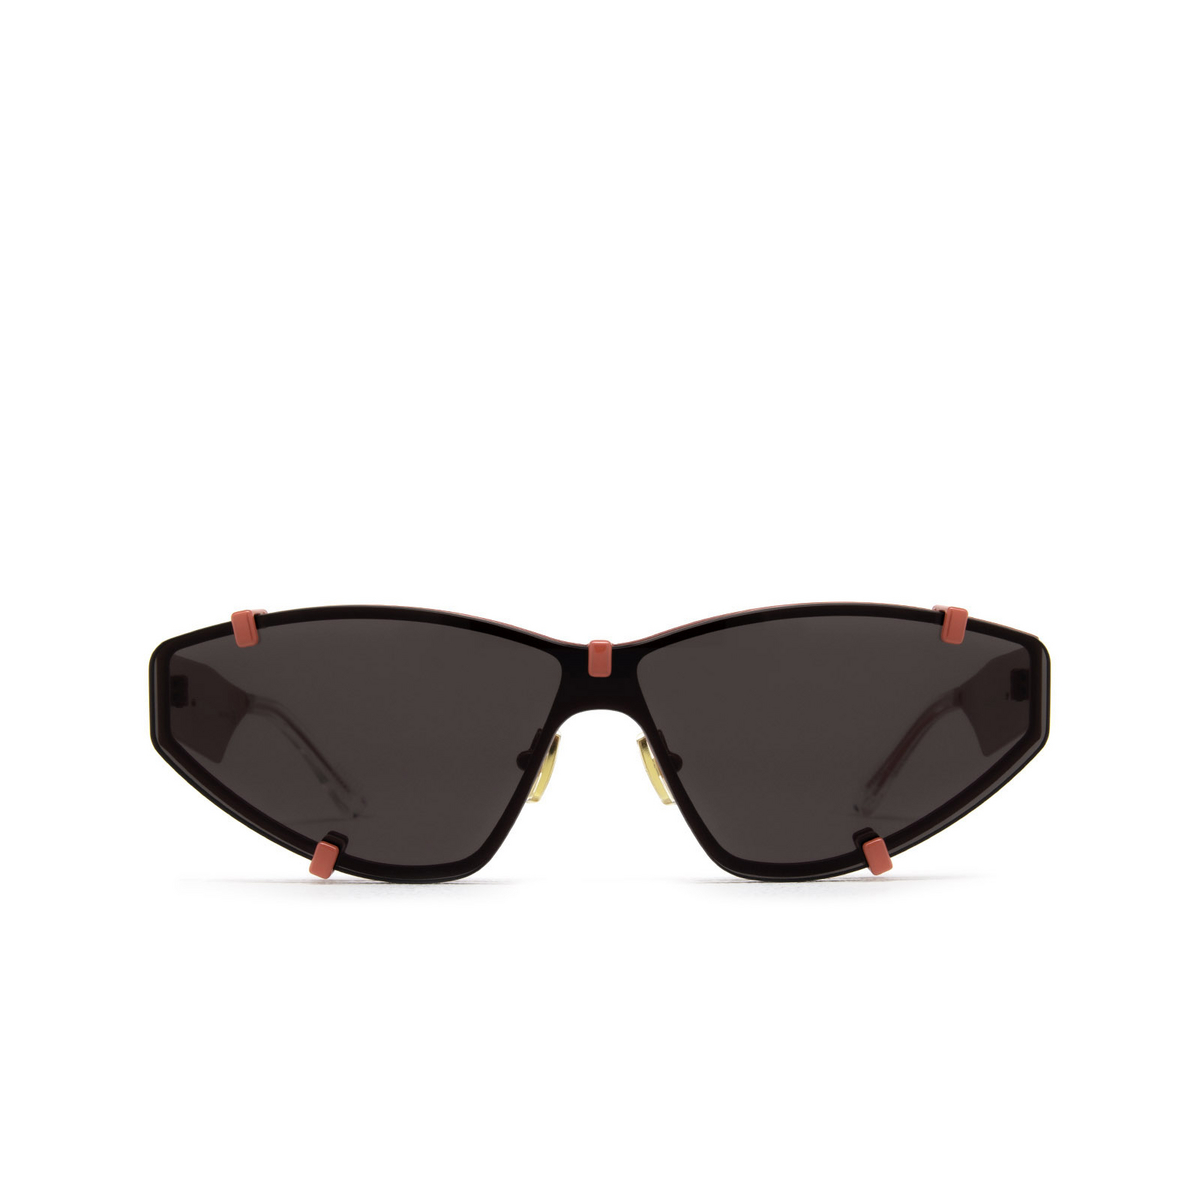 Bottega Veneta® Irregular Sunglasses: BV1165S color Pink 003 - front view.